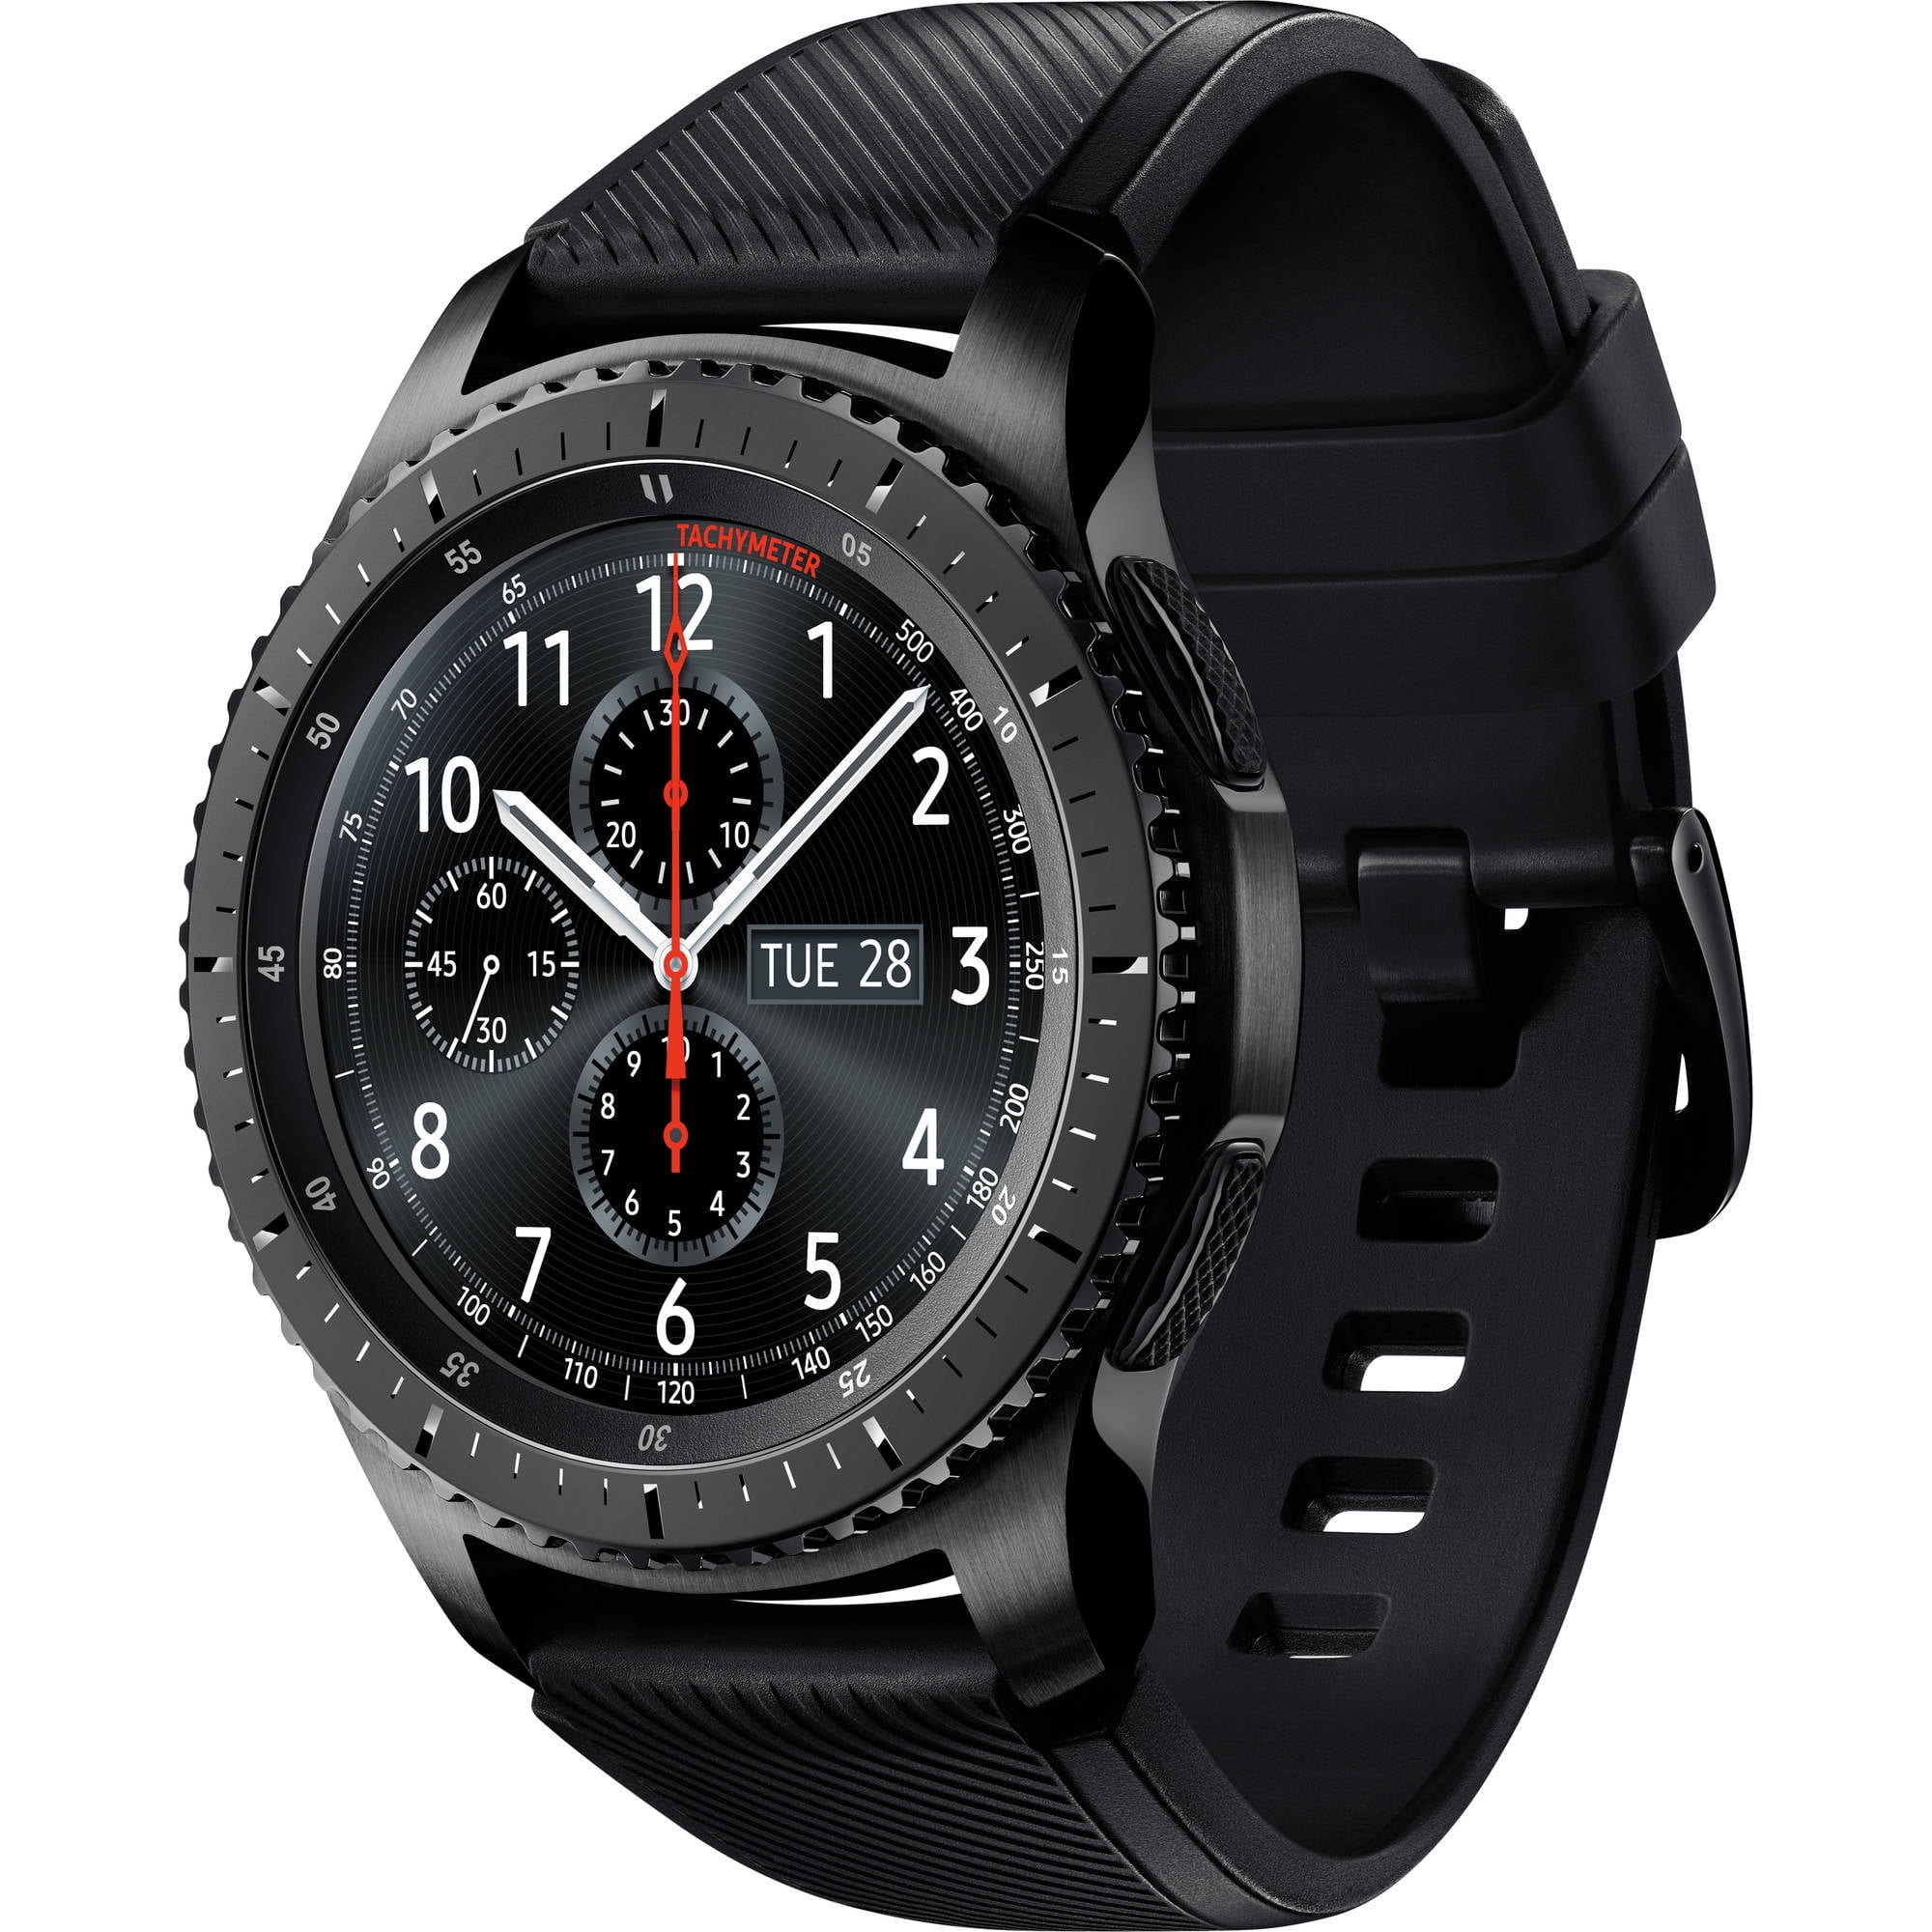 SAMSUNG Gear S3 Frontier Smart Watch 46mm - SM-R760NDAAXAR Walmart.com